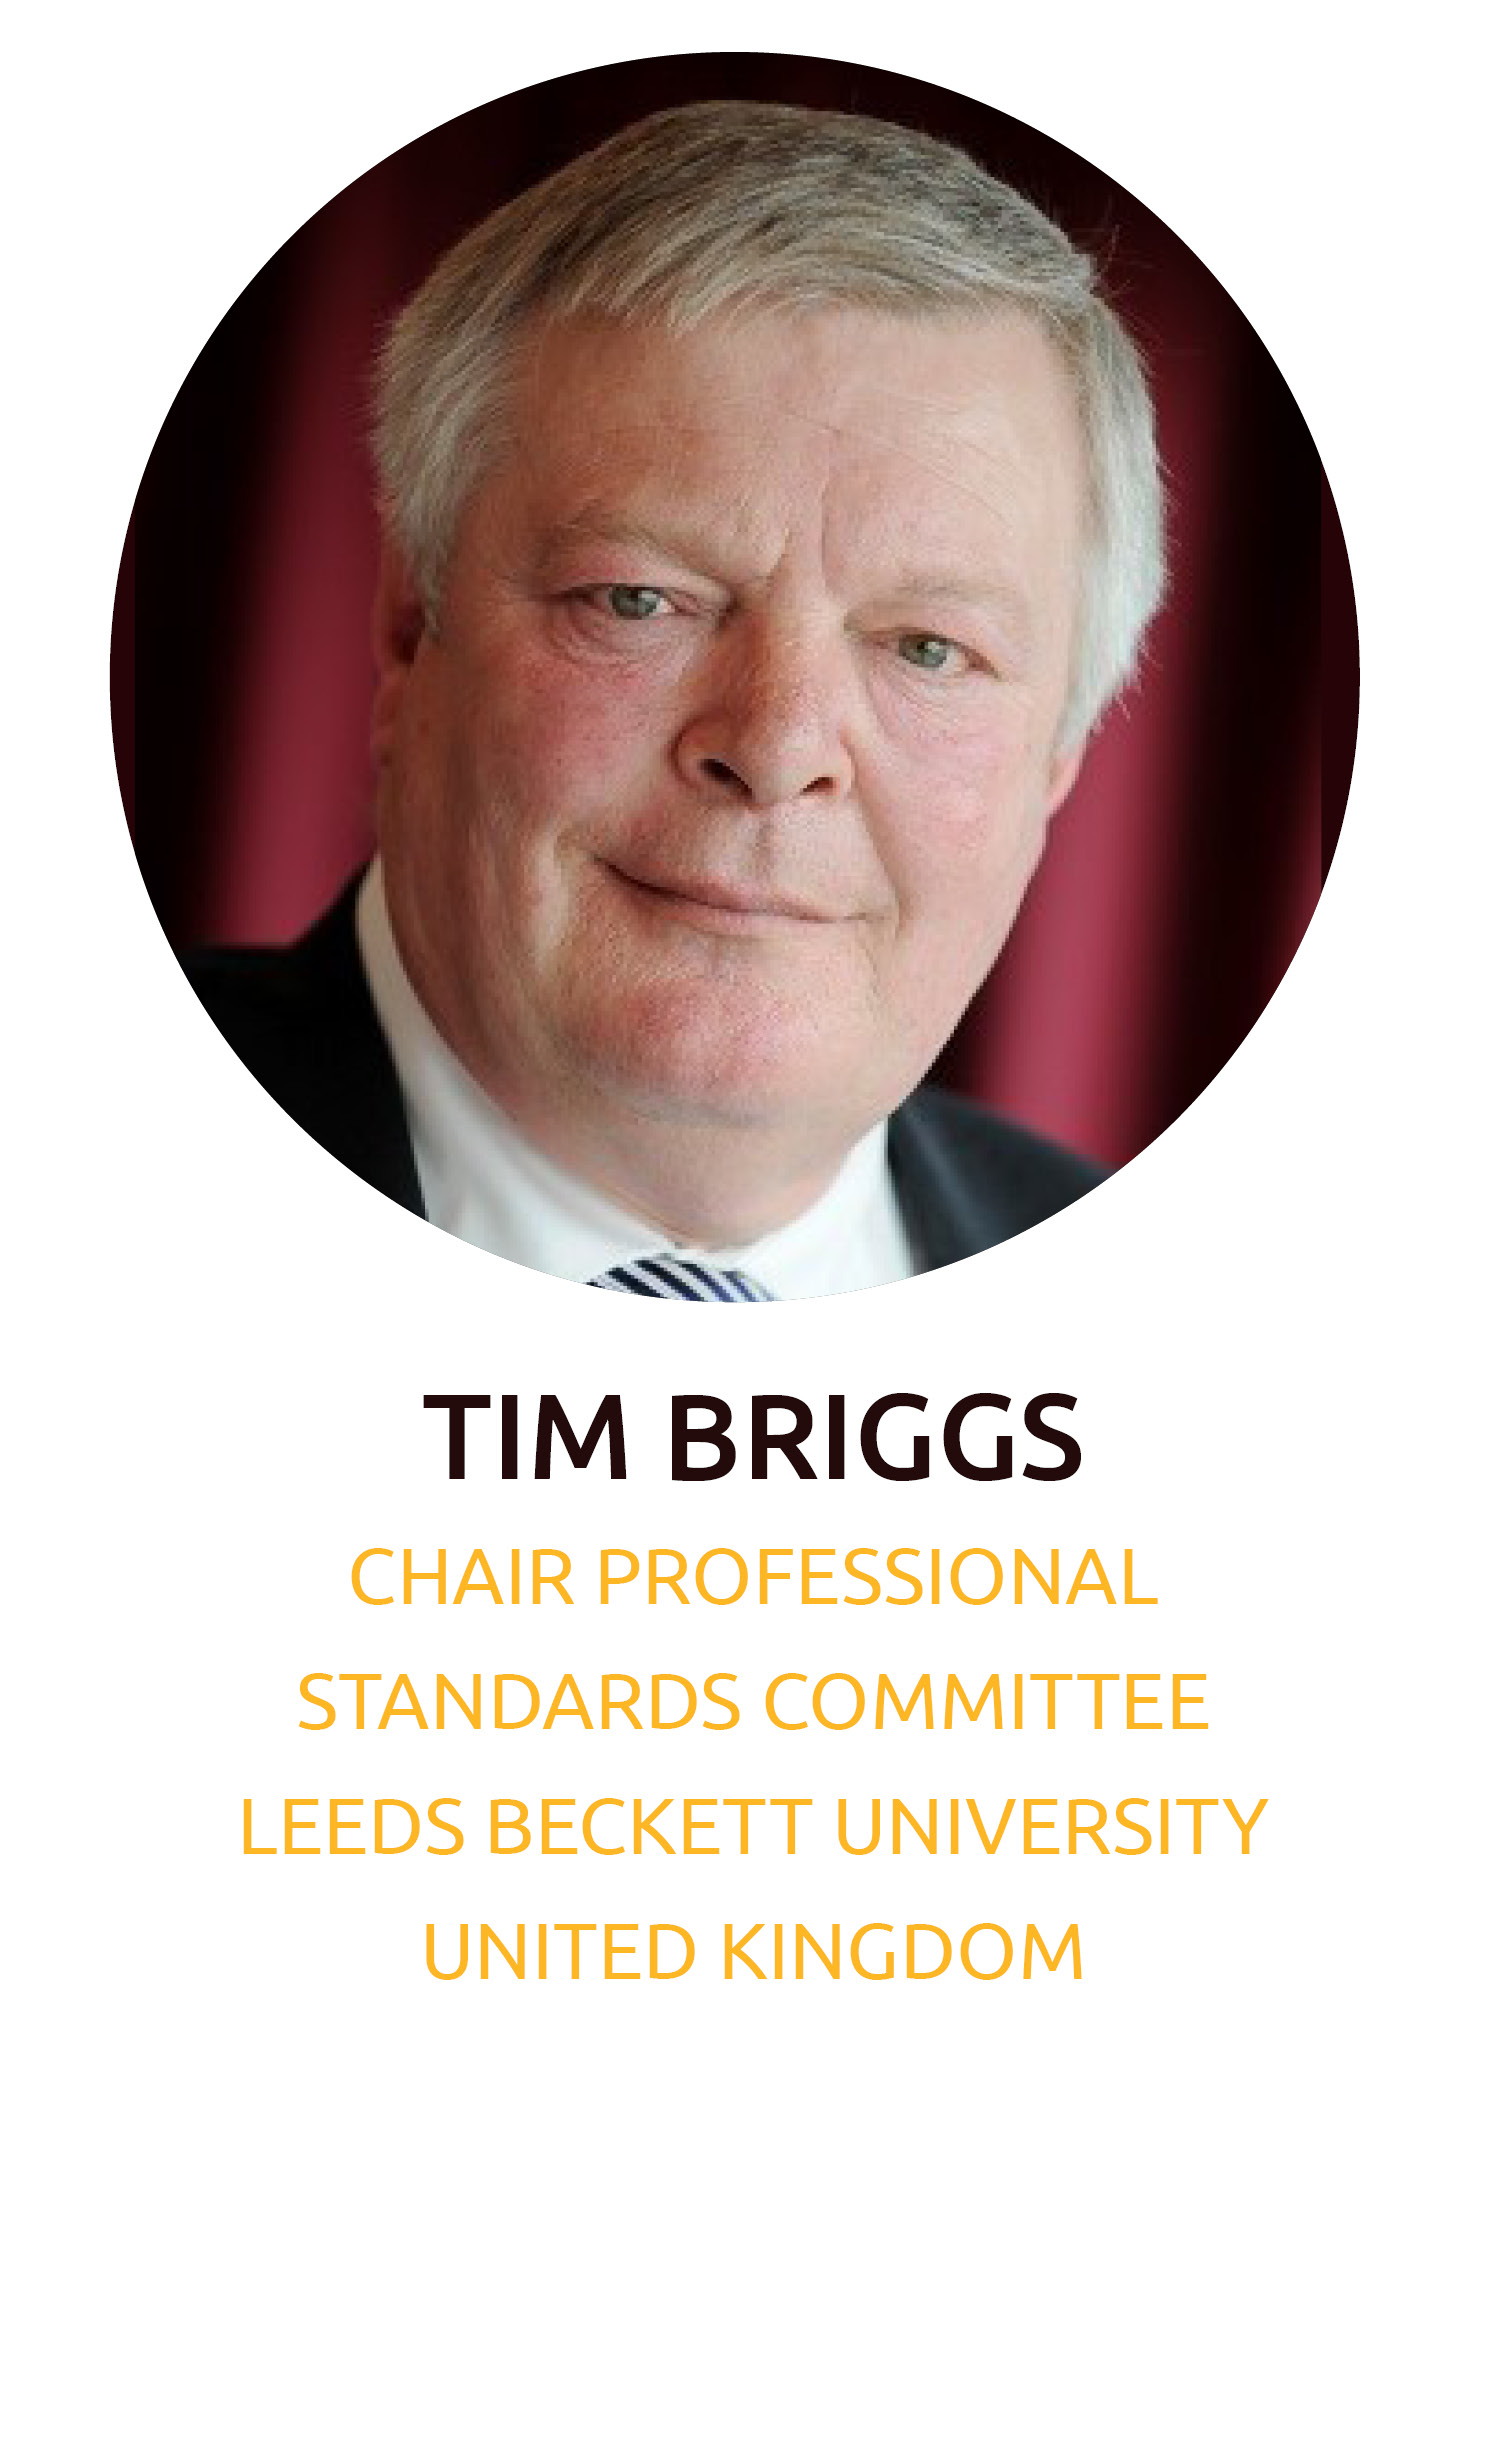 Tim Briggs